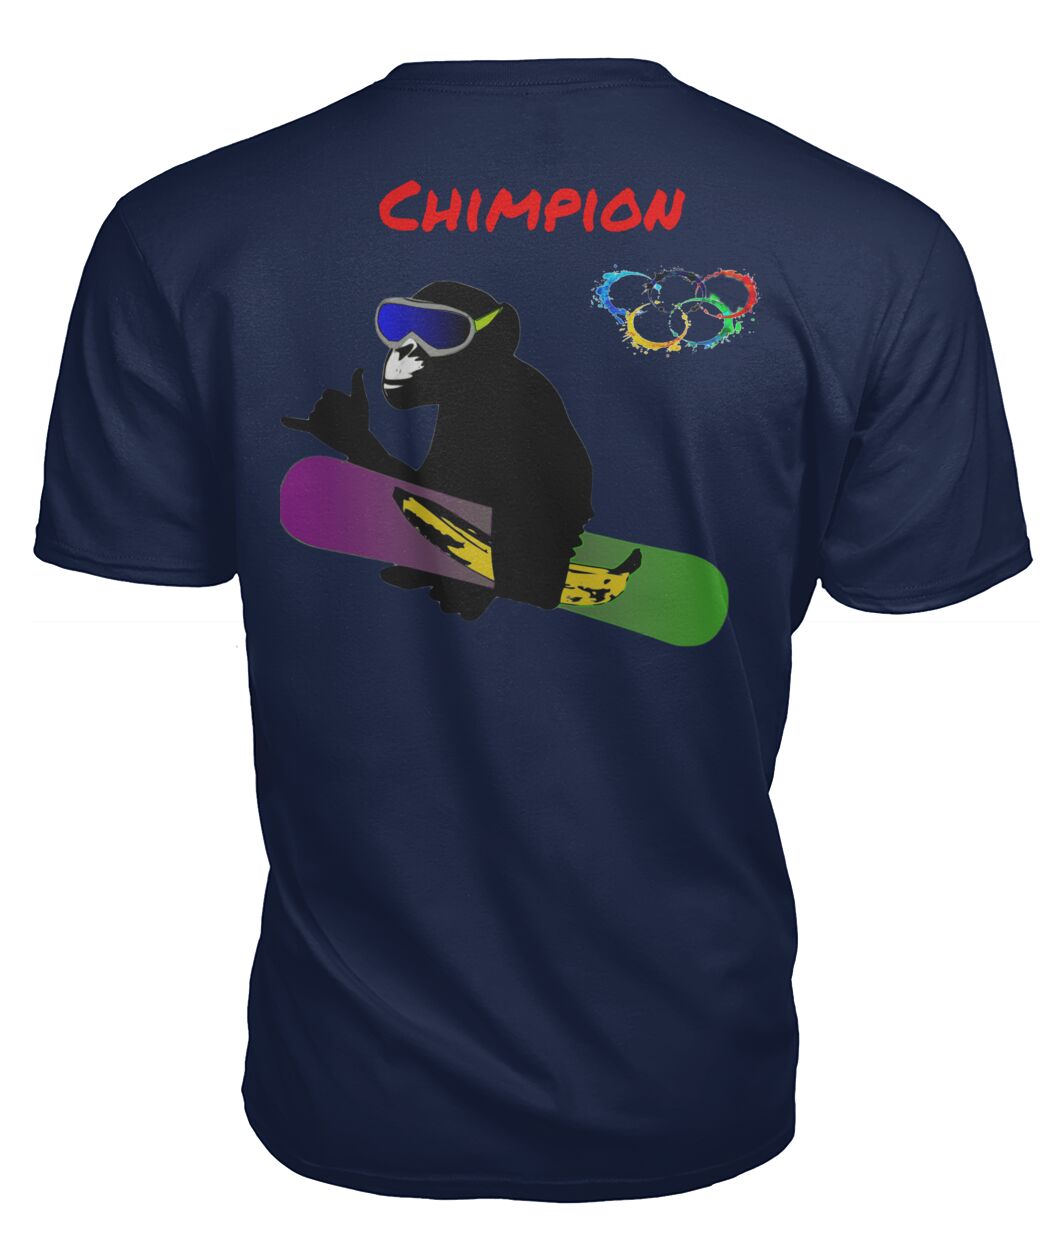 Olympic Chimpion